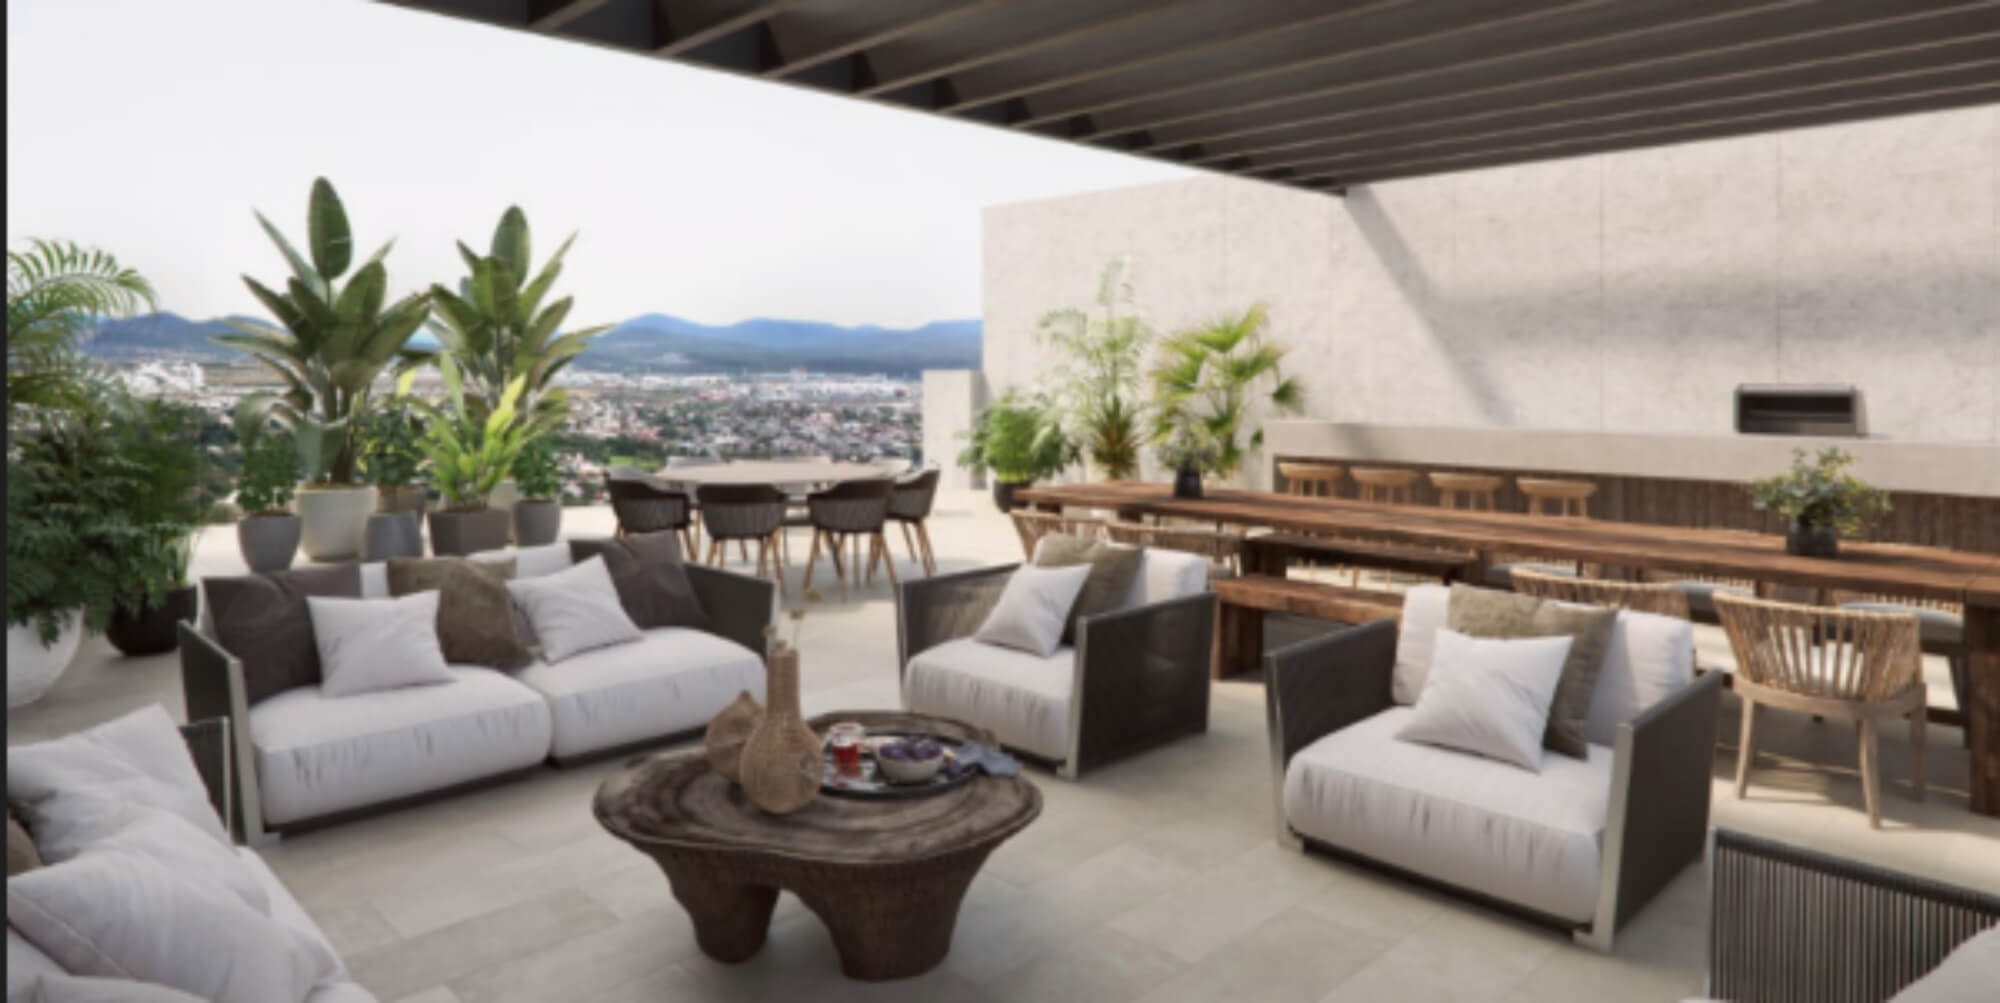 Apartment with garden, pool, terrace, pet-friendly for sale Querétaro.